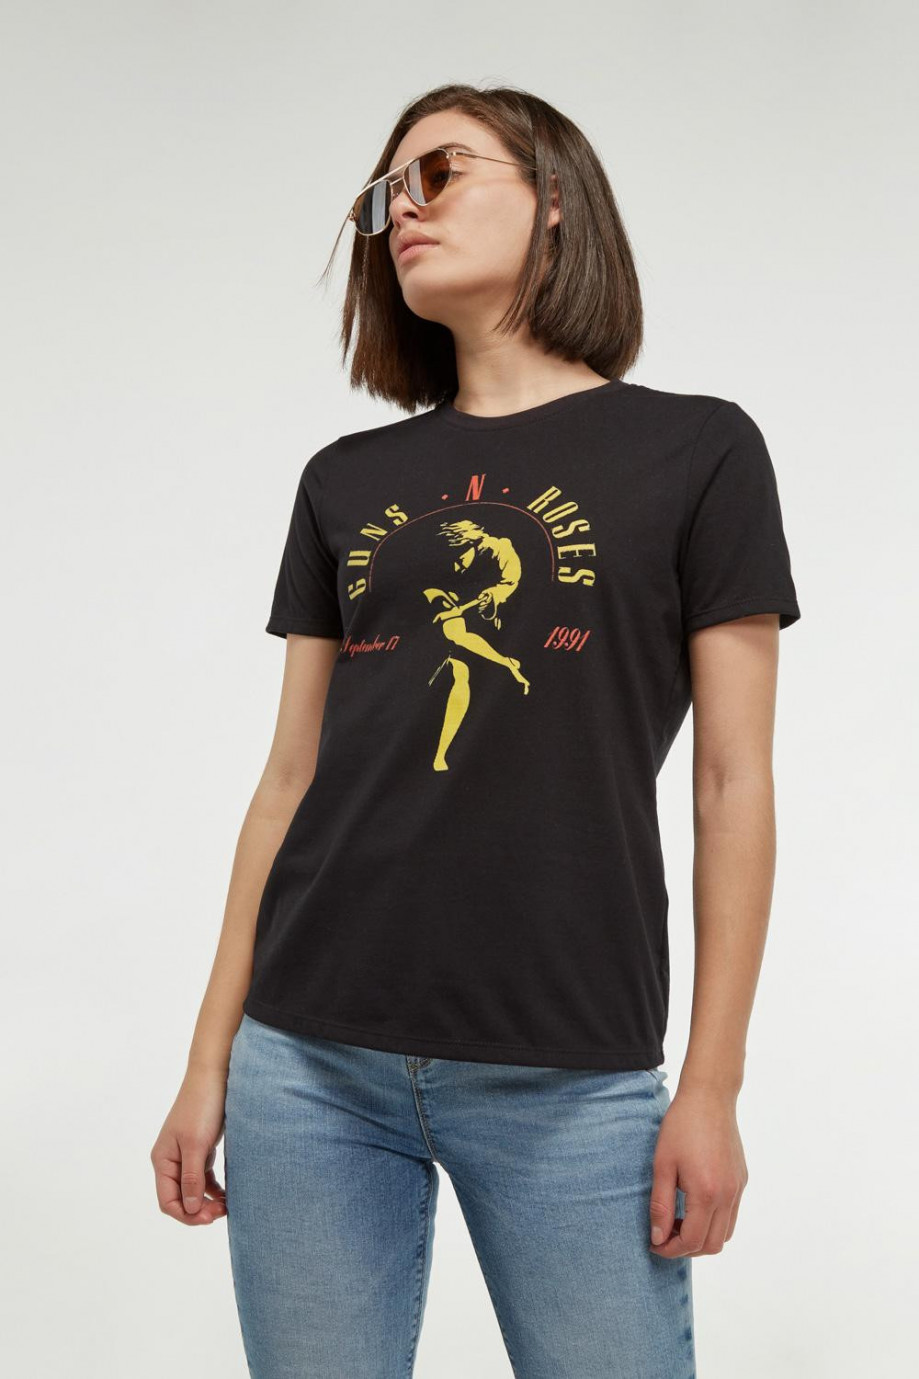 Camiseta, estampado de Guns N' Roses.